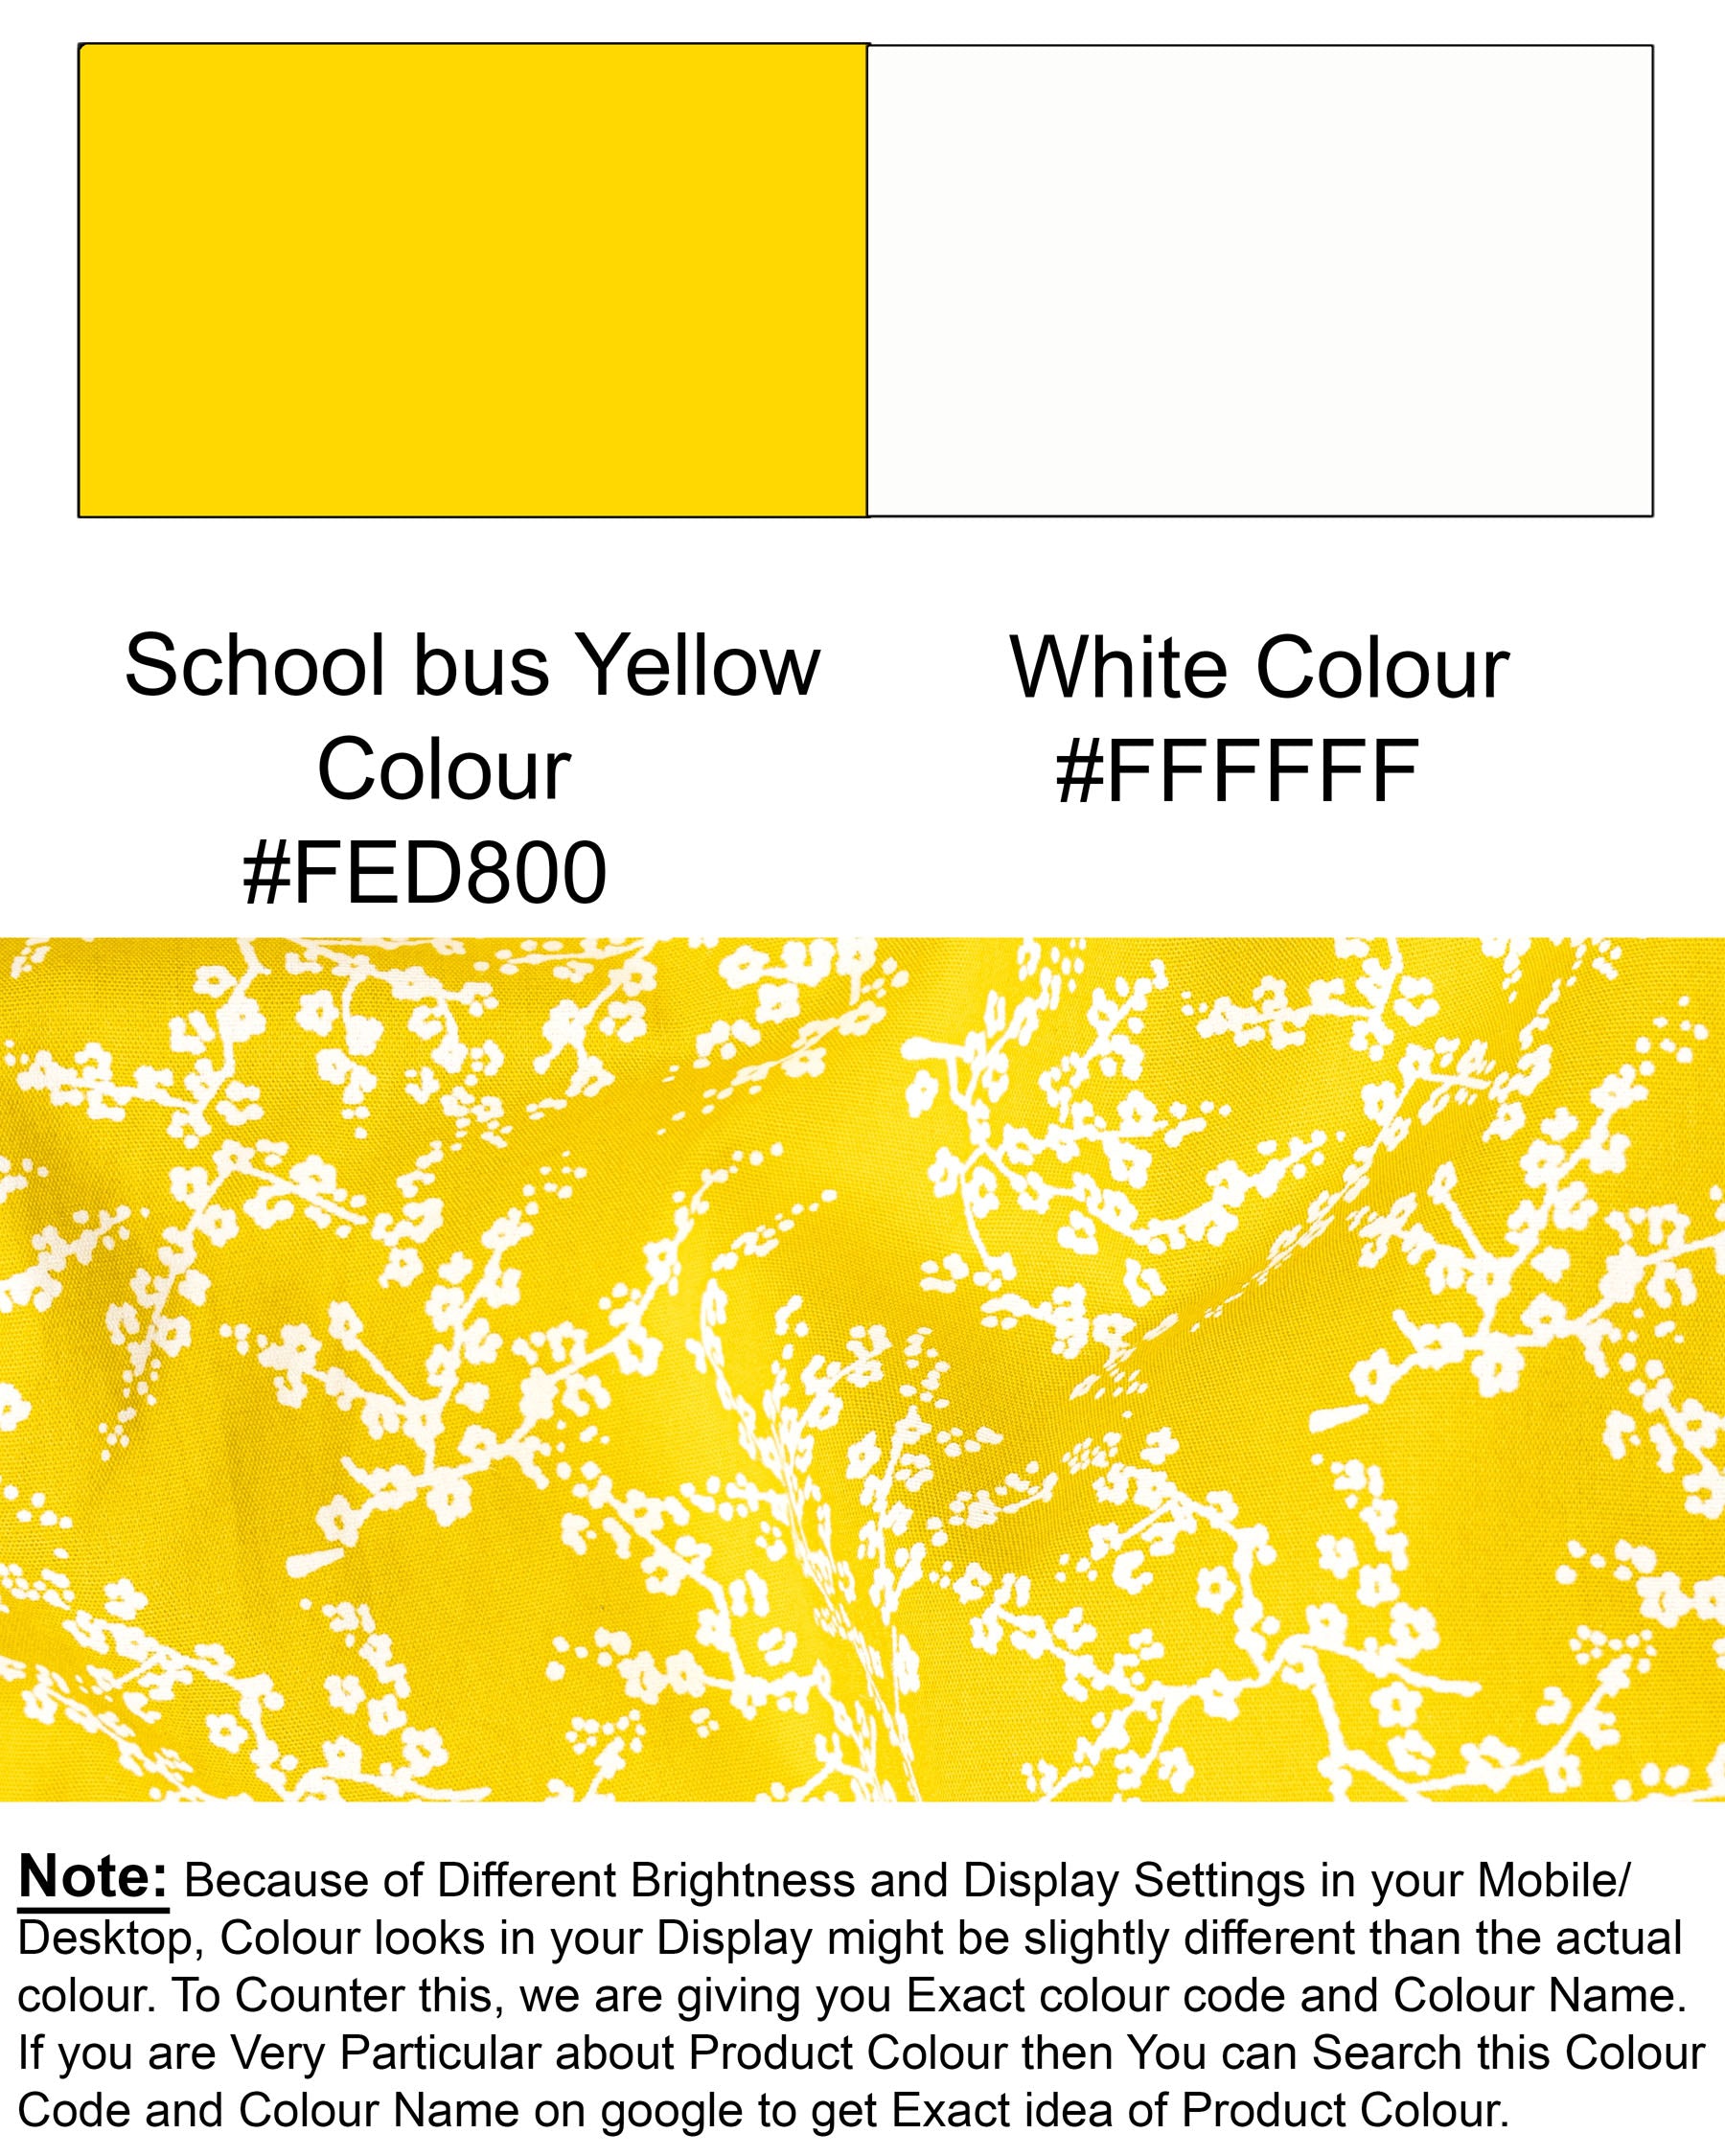 School Bus Yellow and White Flower Vine Printed Super Soft Premium Cotton Shirt 6592-BD-38,6592-BD-H-38,6592-BD-39,6592-BD-H-39,6592-BD-40,6592-BD-H-40,6592-BD-42,6592-BD-H-42,6592-BD-44,6592-BD-H-44,6592-BD-46,6592-BD-H-46,6592-BD-48,6592-BD-H-48,6592-BD-50,6592-BD-H-50,6592-BD-52,6592-BD-H-52